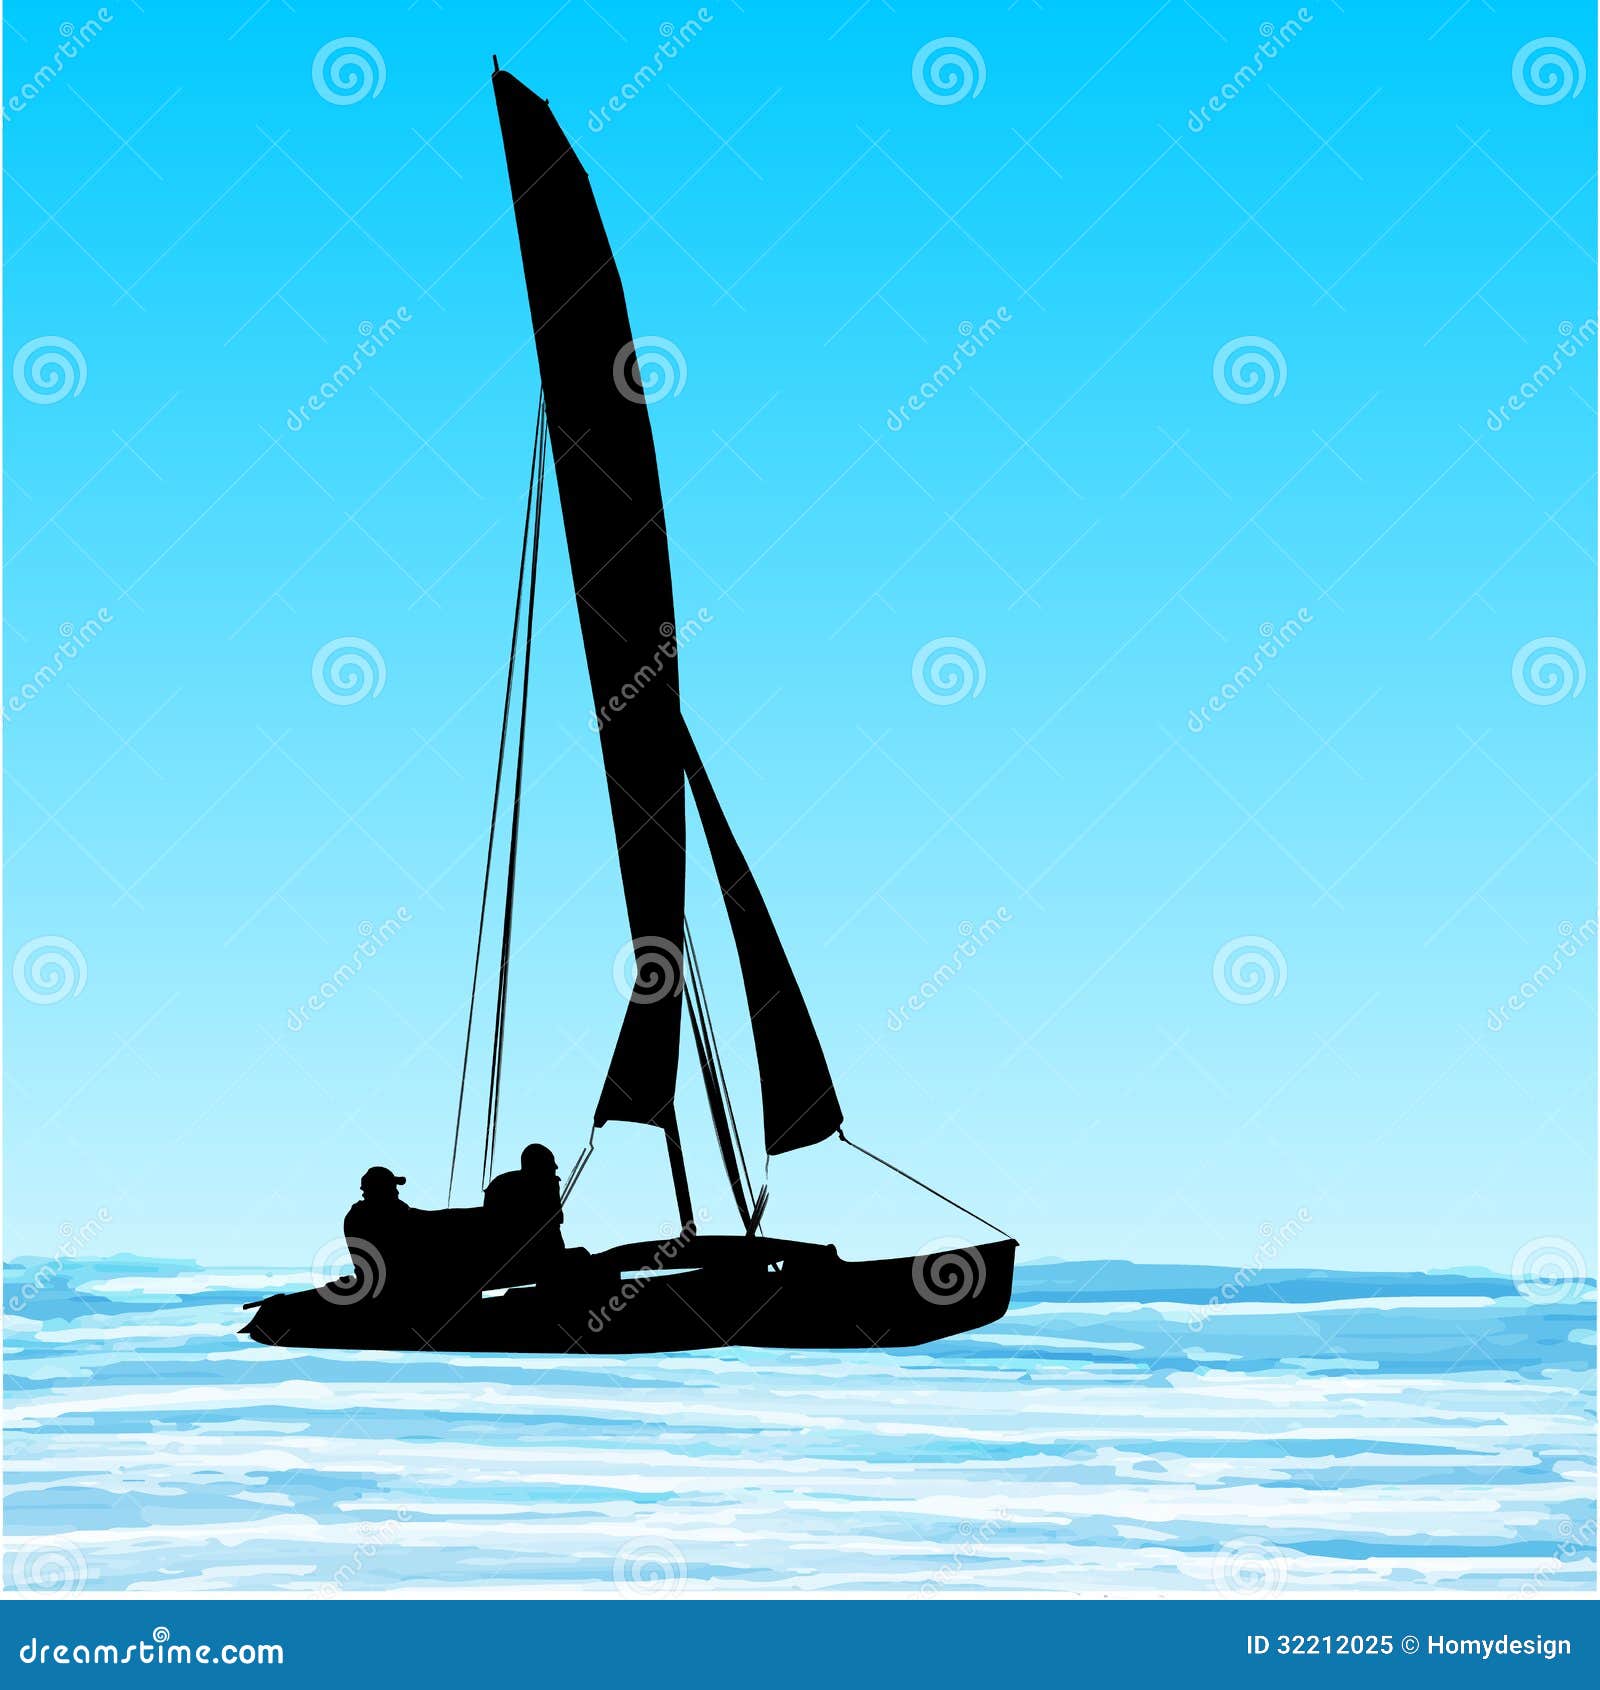 sailing catamaran silhouette